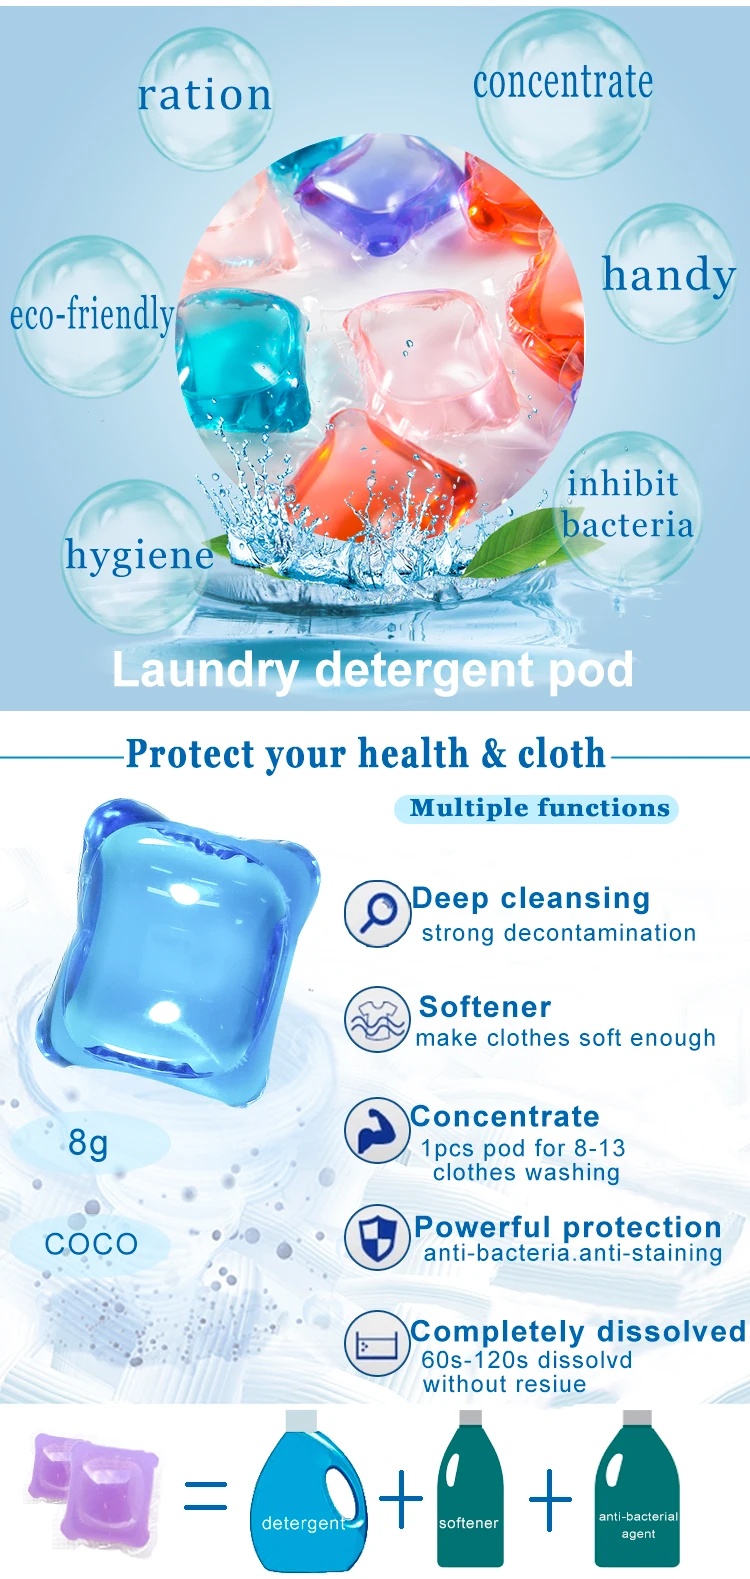 eco friendly dishwasher tablets cleaning washing apparel bulk detergent capsule laundry pods bulk laundry detergent liquid